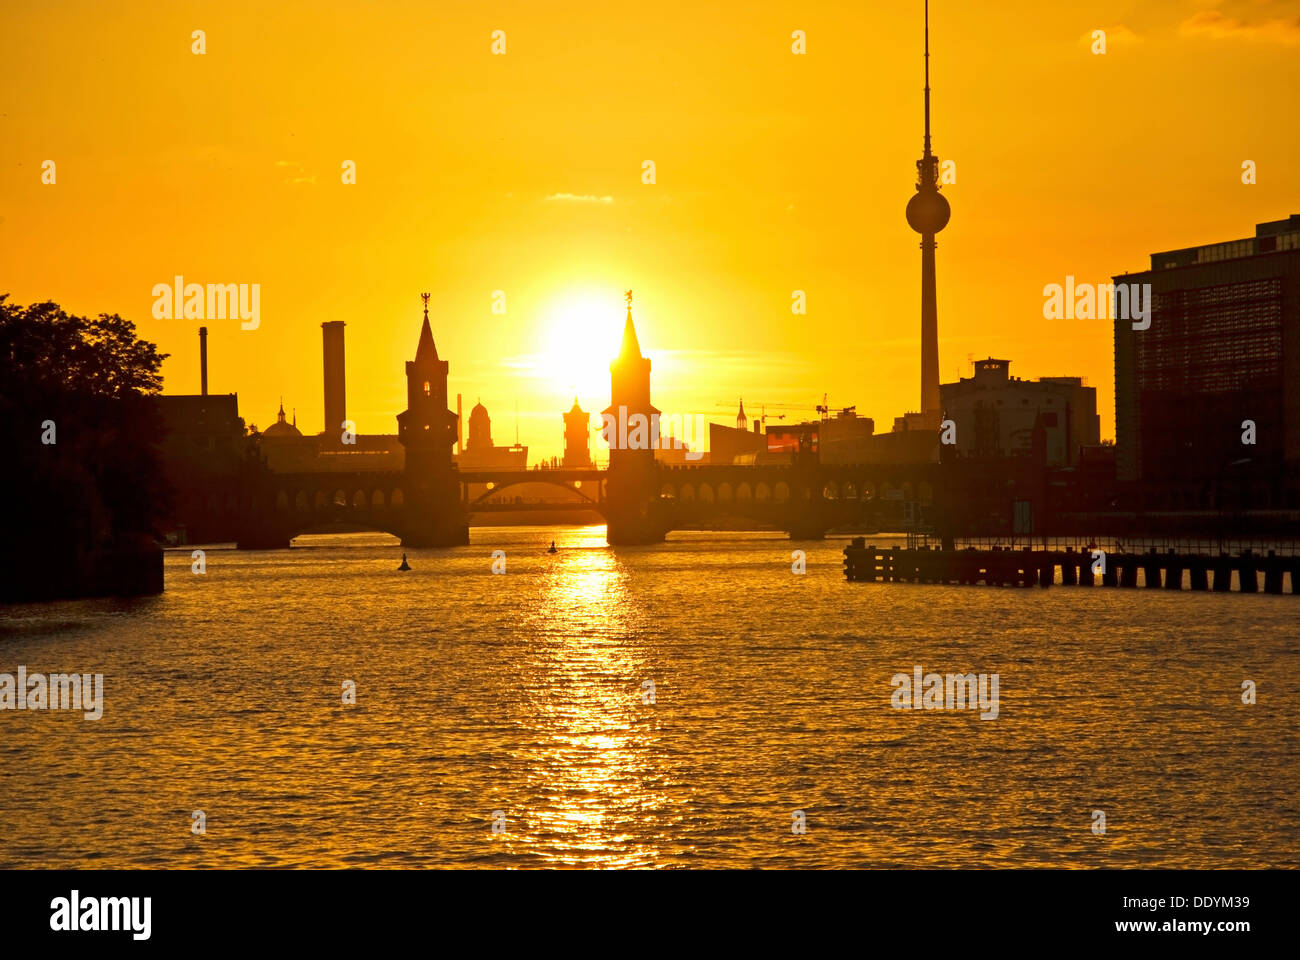 Oberbaumbruecke bridge and Spree river at sunset, Berlin Stock Photo